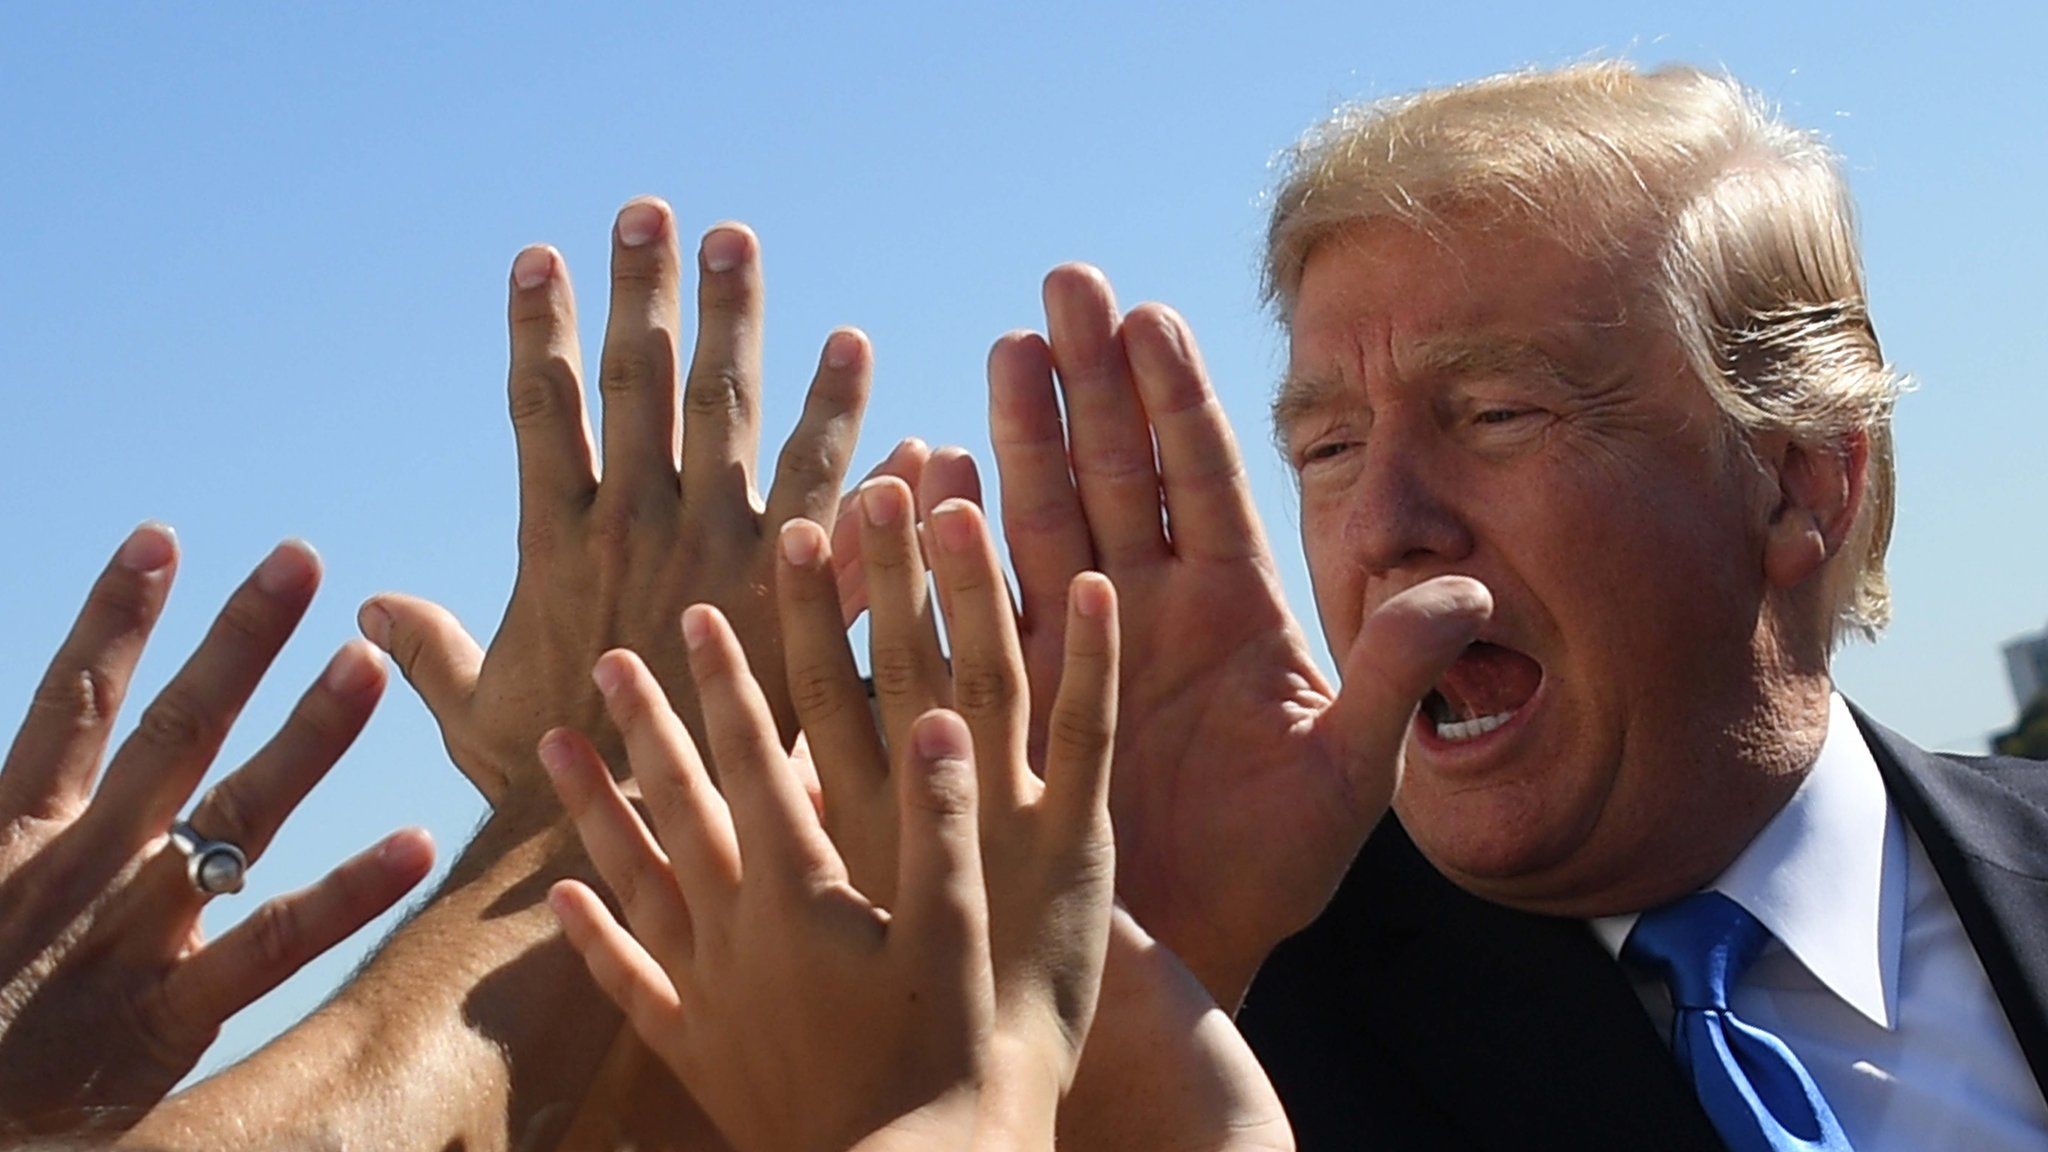 Donald Trump high-fives